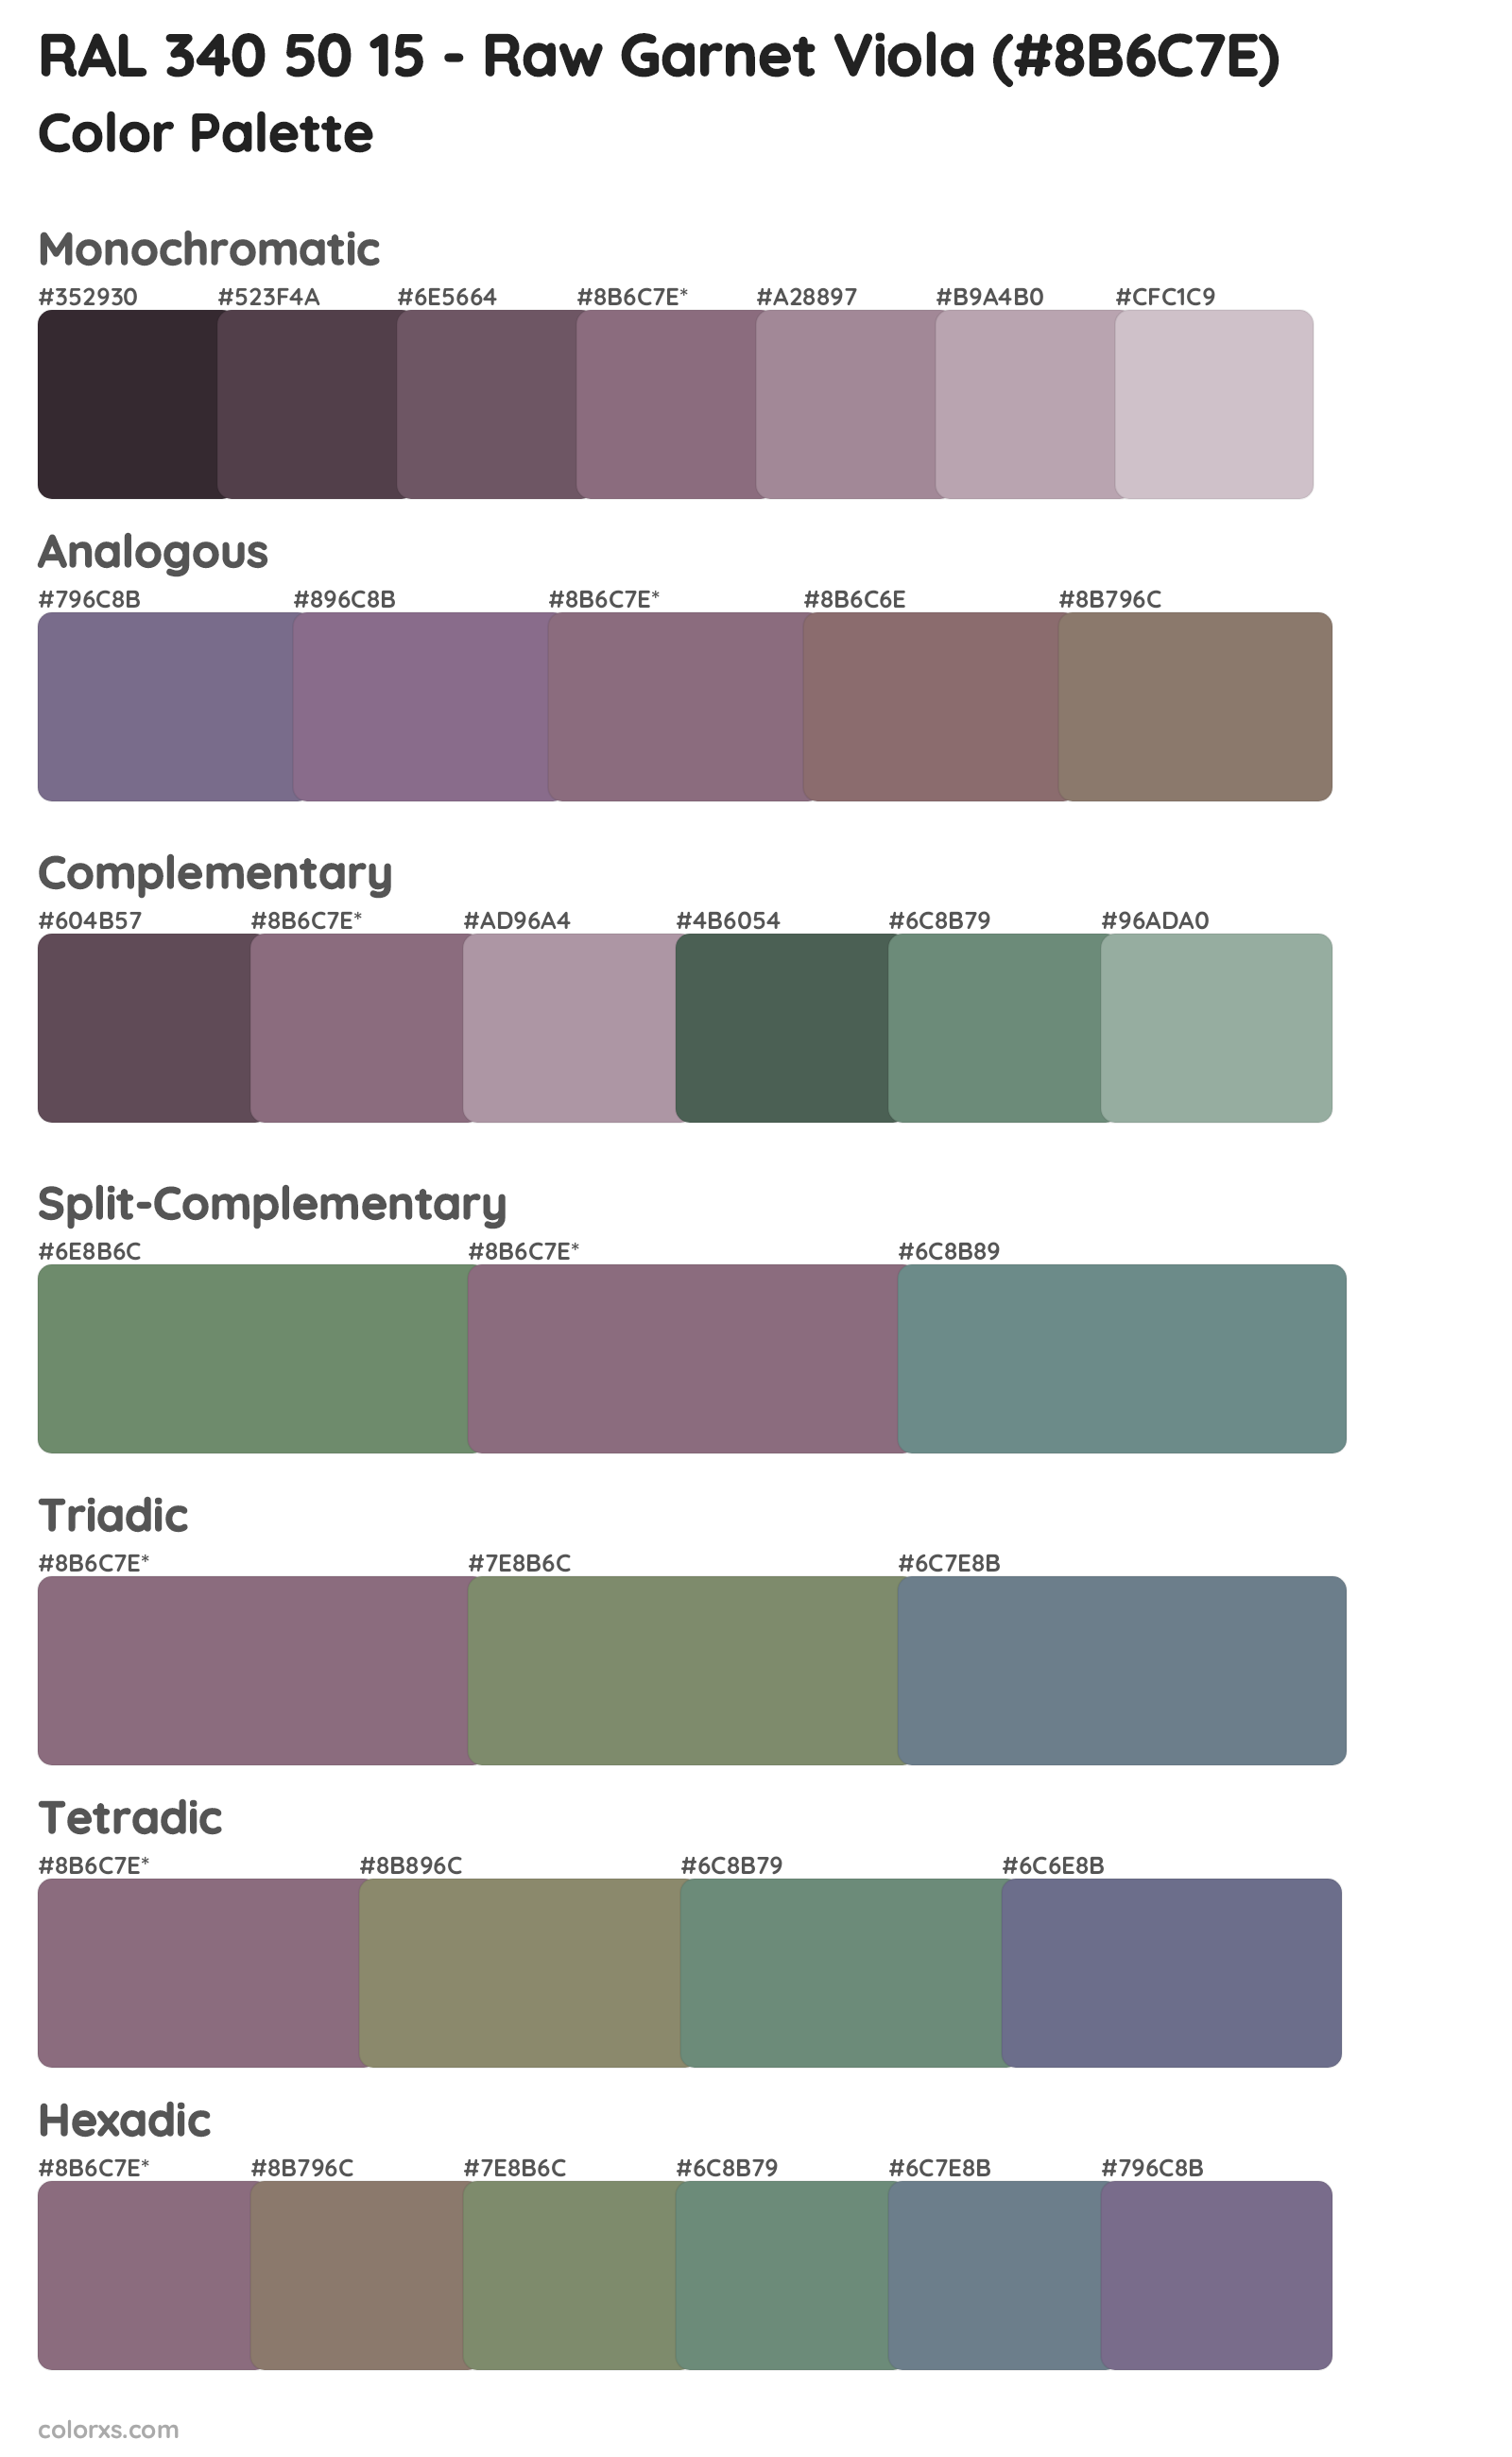 RAL 340 50 15 - Raw Garnet Viola Color Scheme Palettes